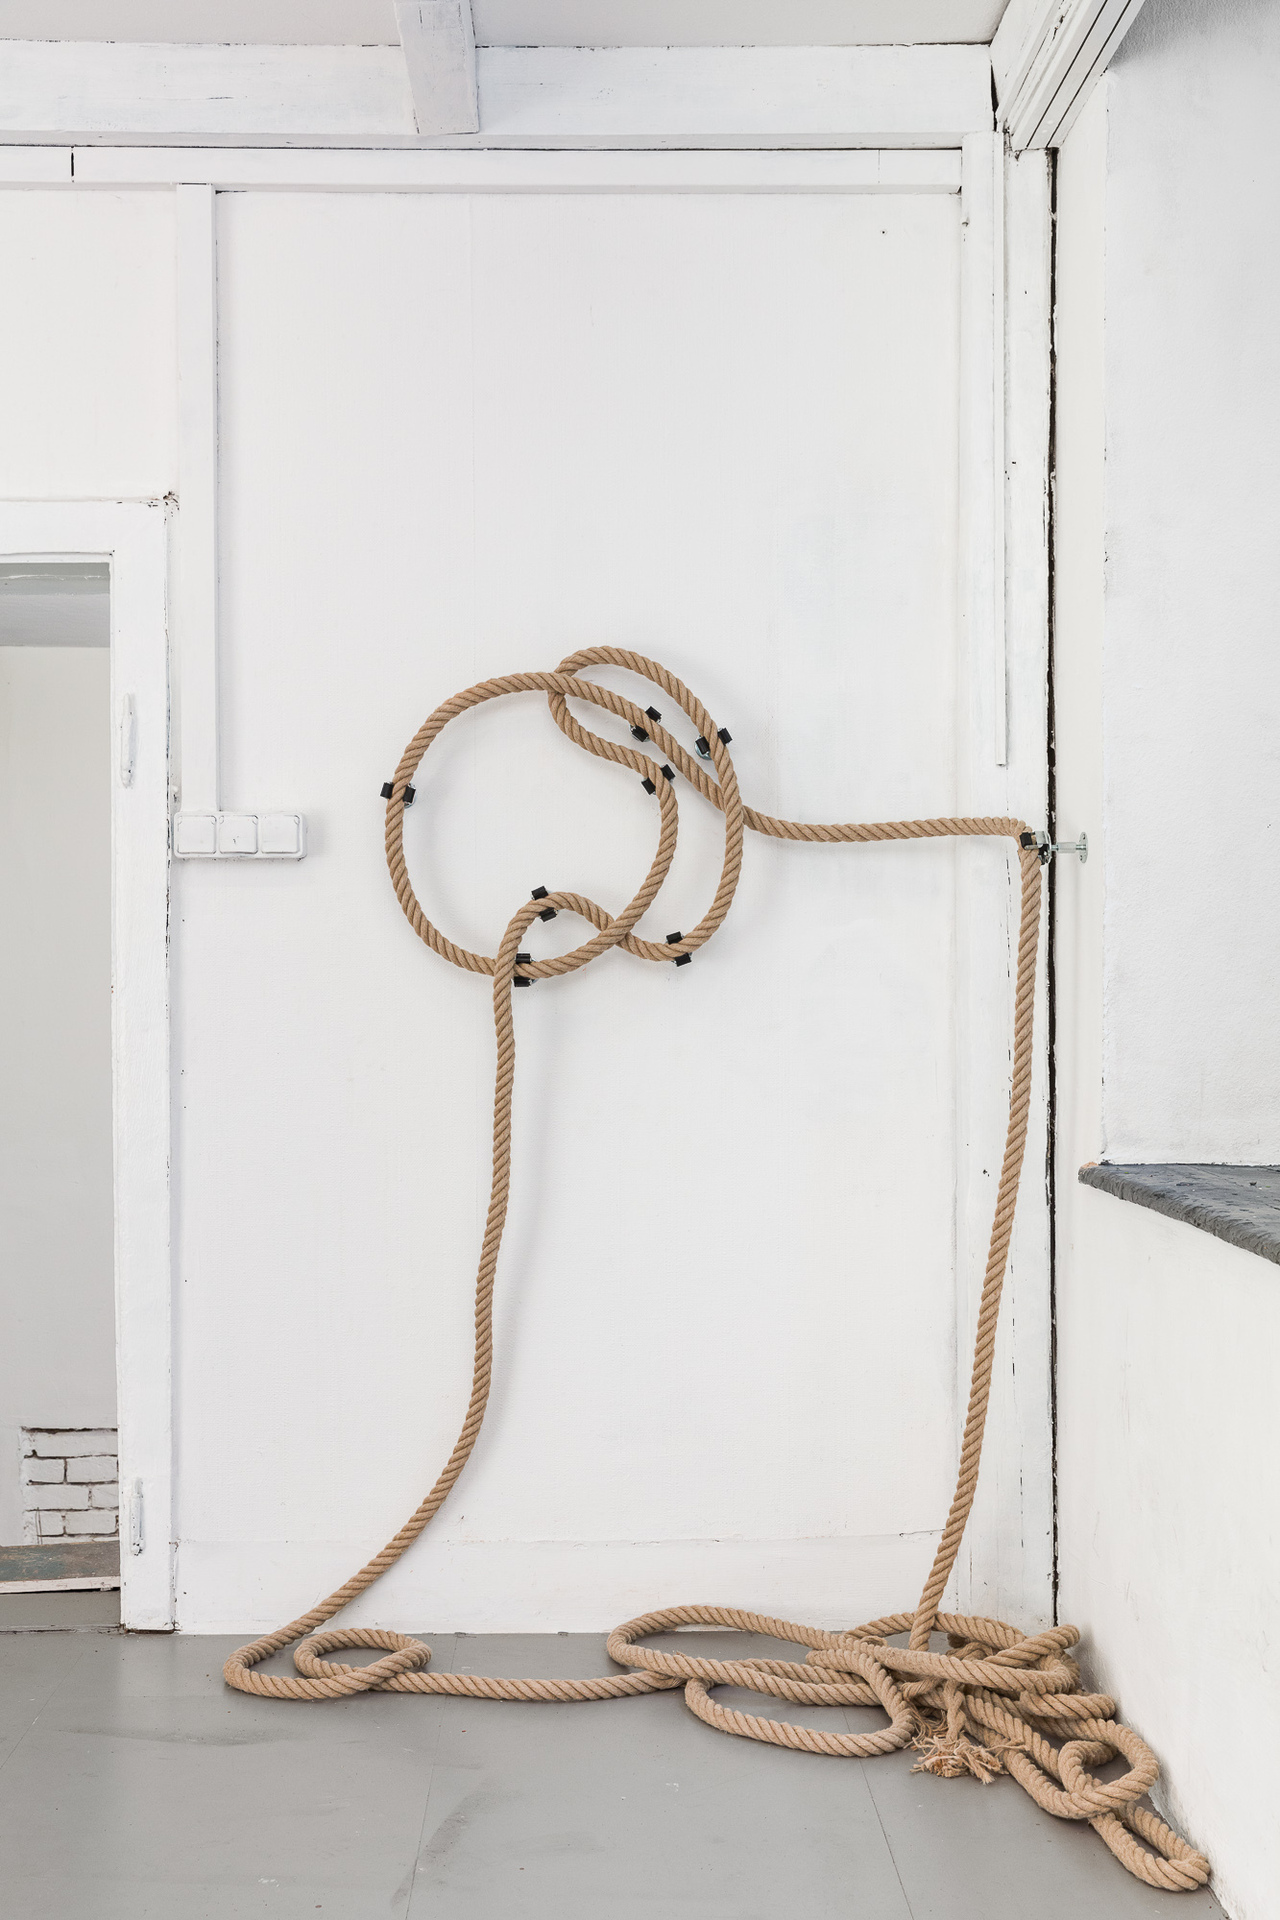 8Schirin Charlot, Round Dance, 2020, Hemp rope & device holder, 185 x 53 cm